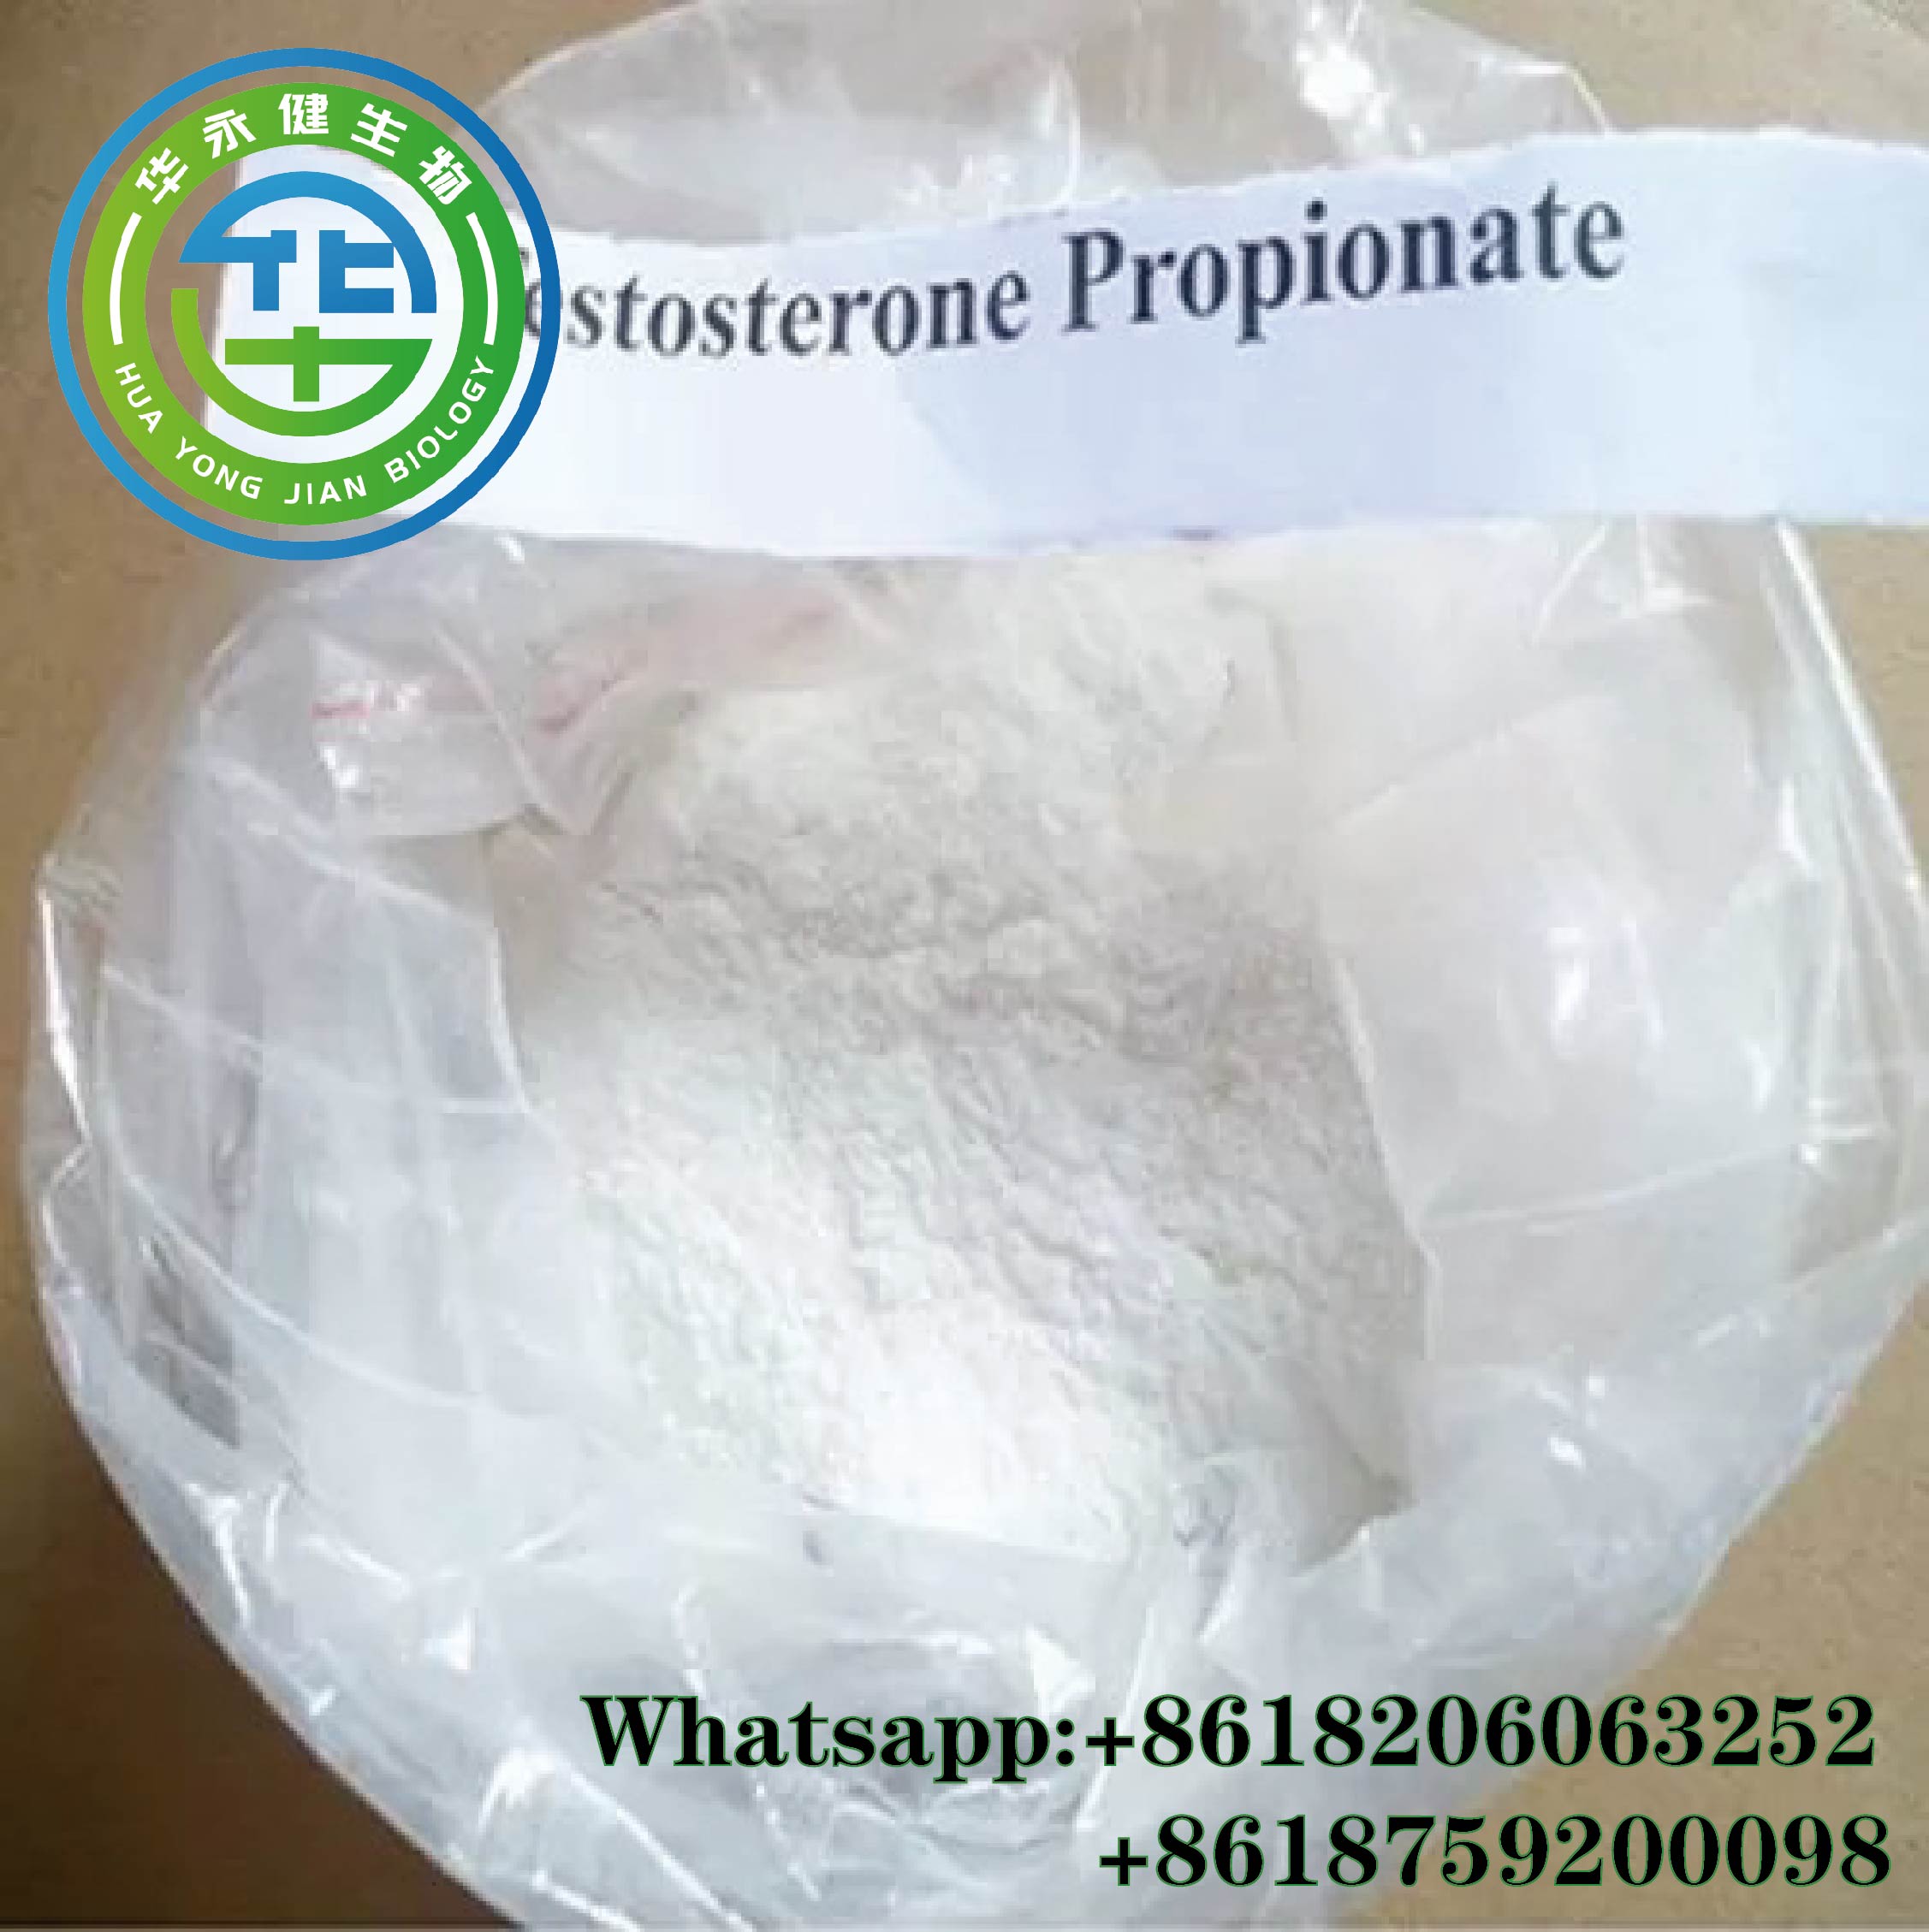 Testosterone Propionate Injectable Anabolic Steroids Test Propionate Steroid Powder Hormone Test Prop CasNO.57-85-2